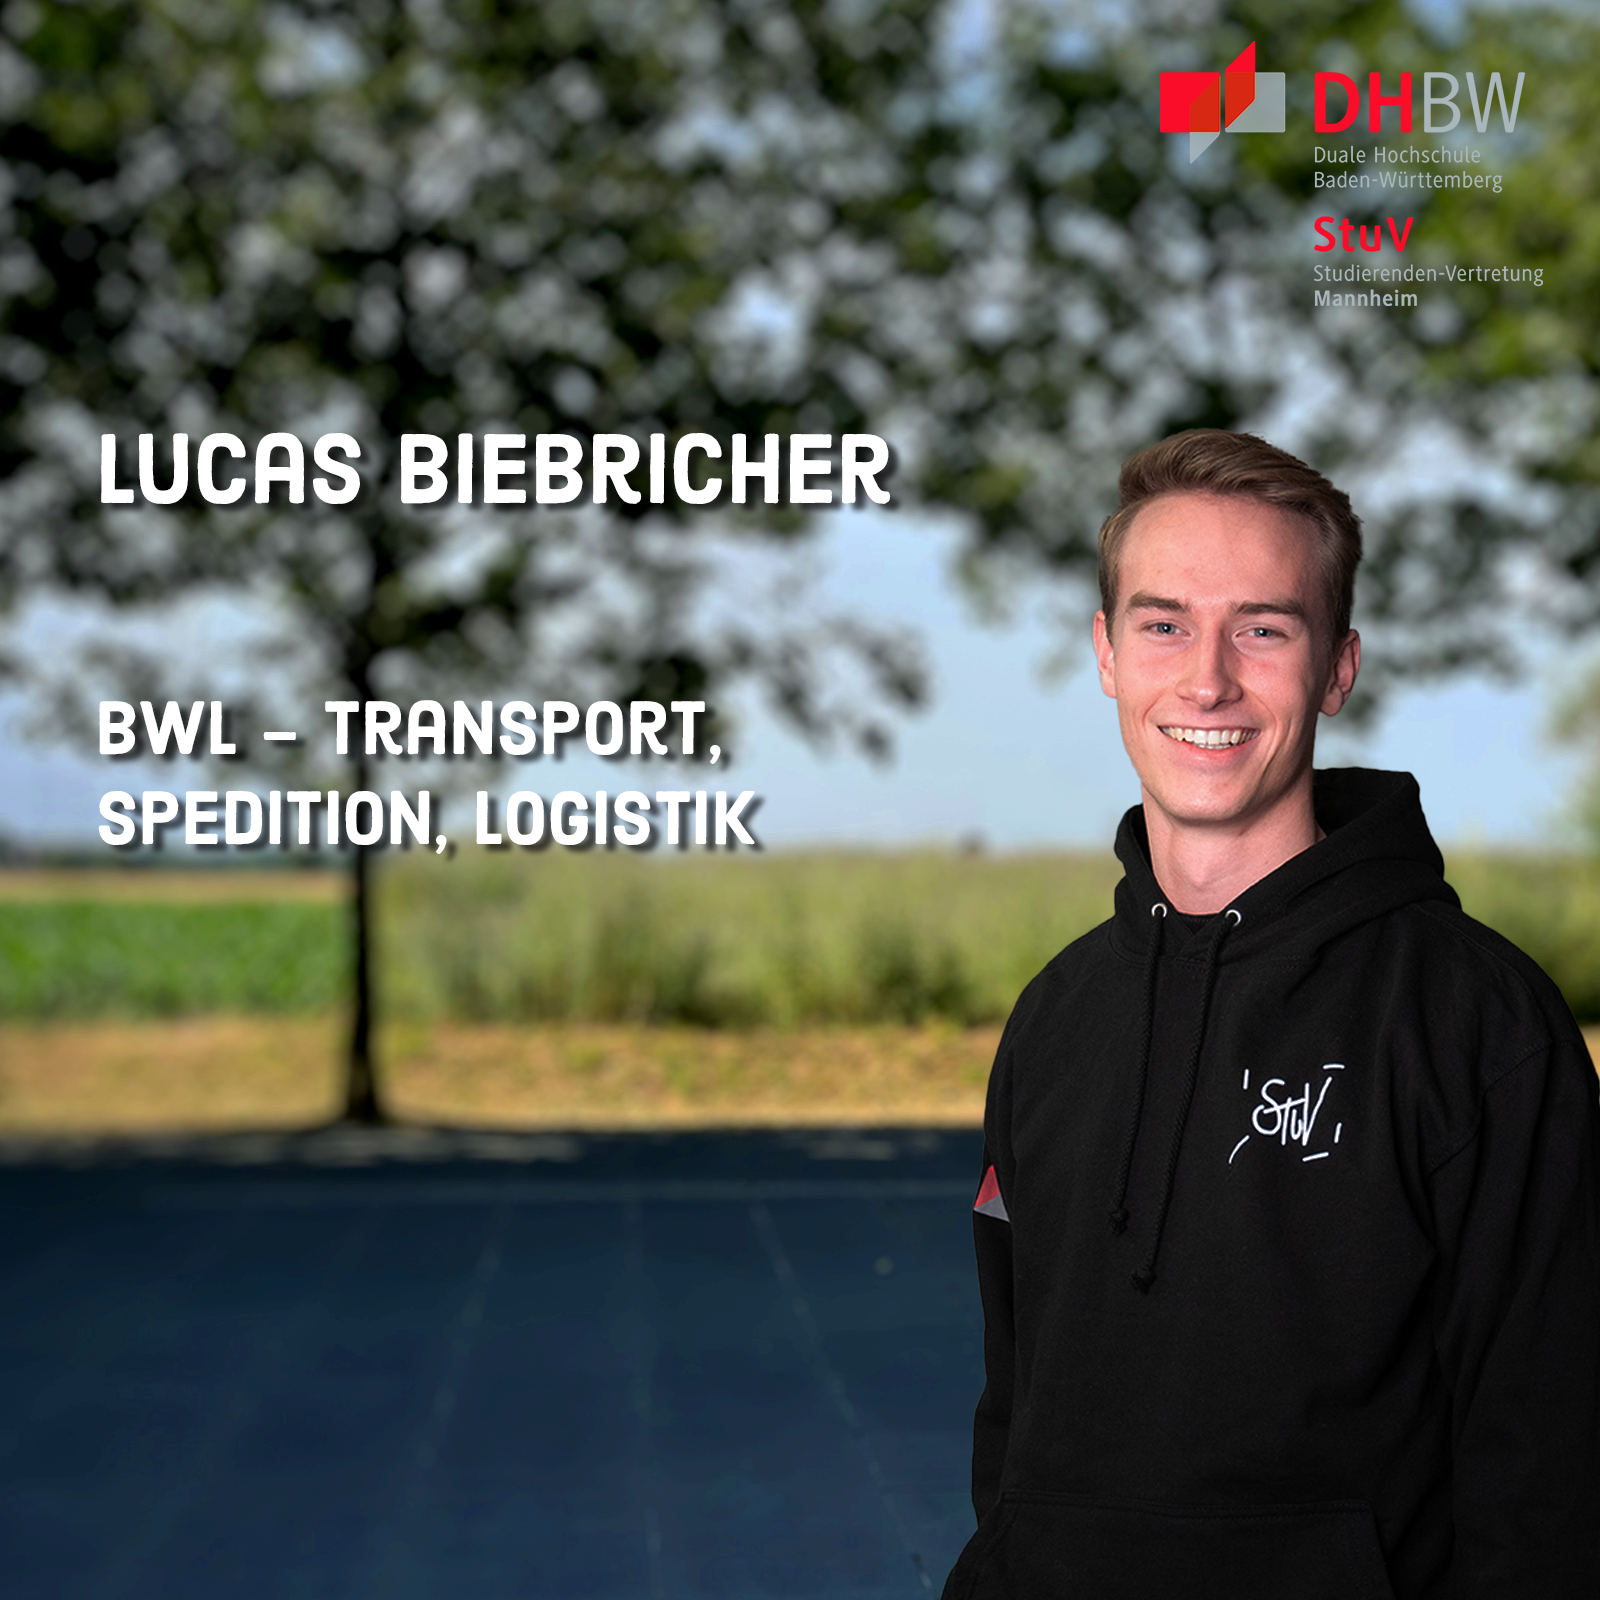 Lucas Biebricher